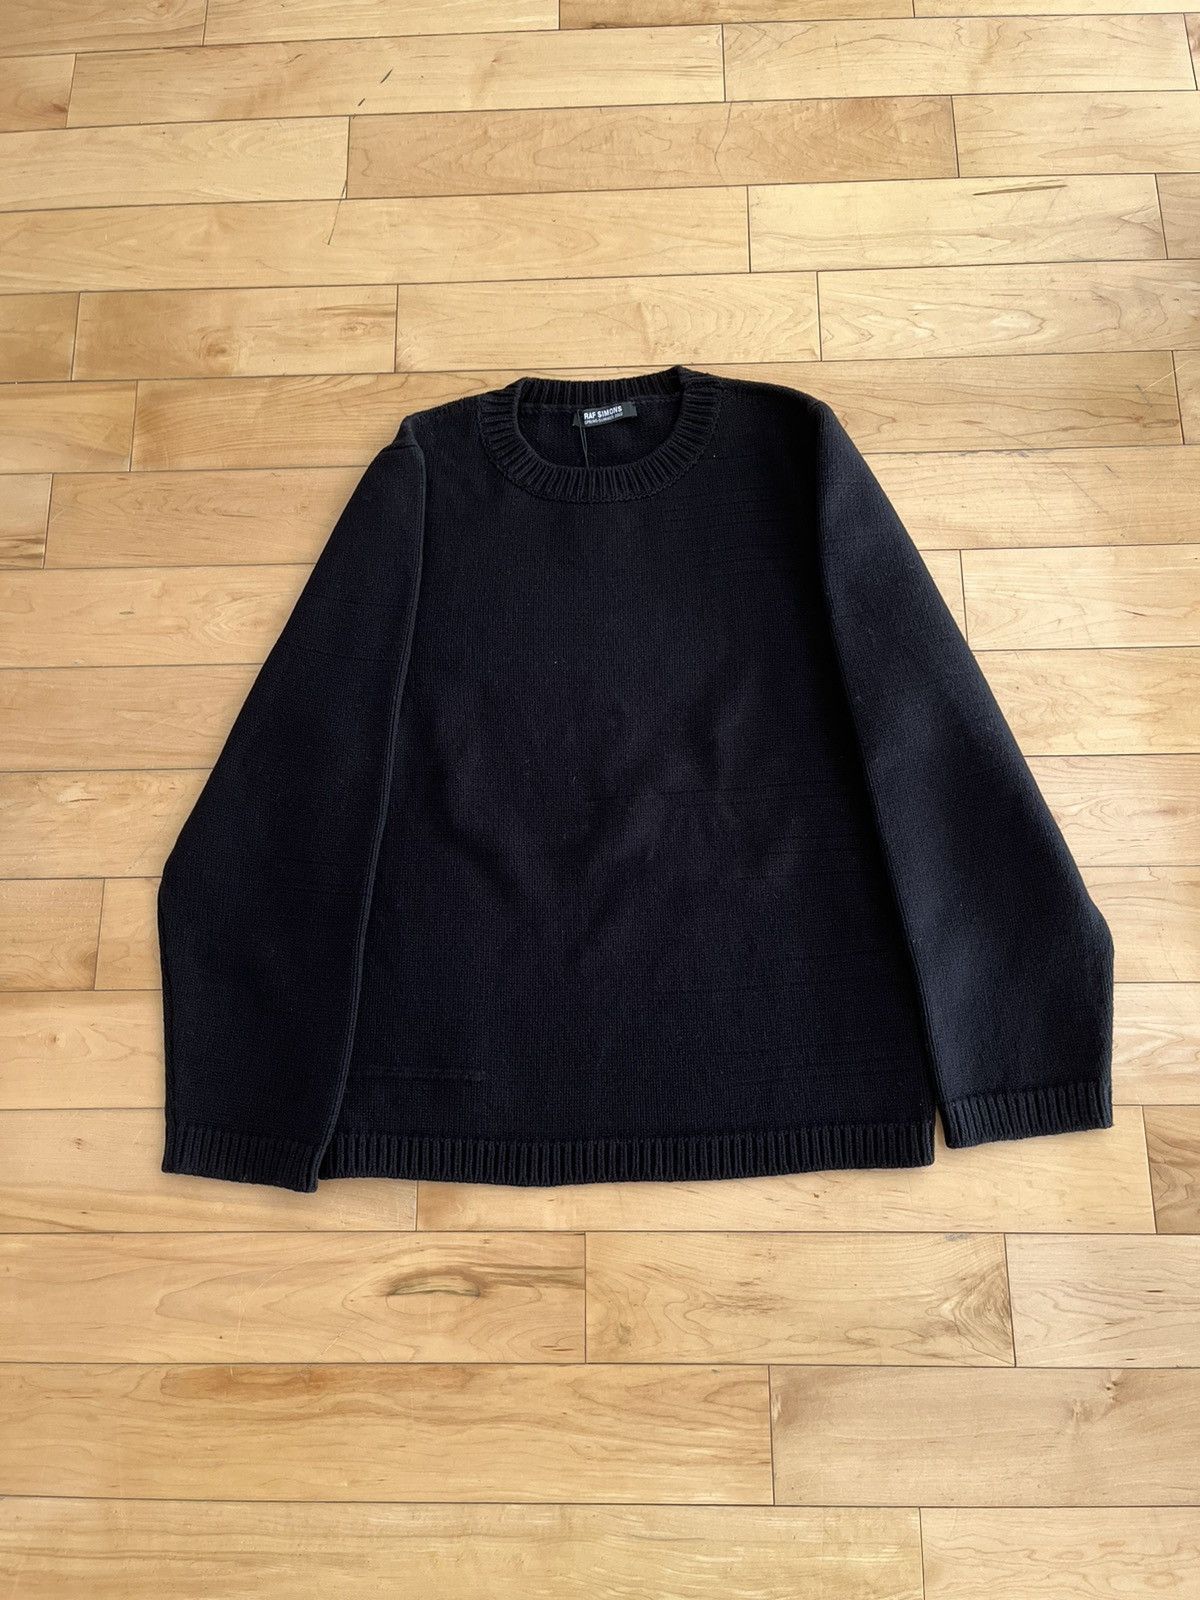 NWT - Raf Simons Merino Wool Sweater - 1